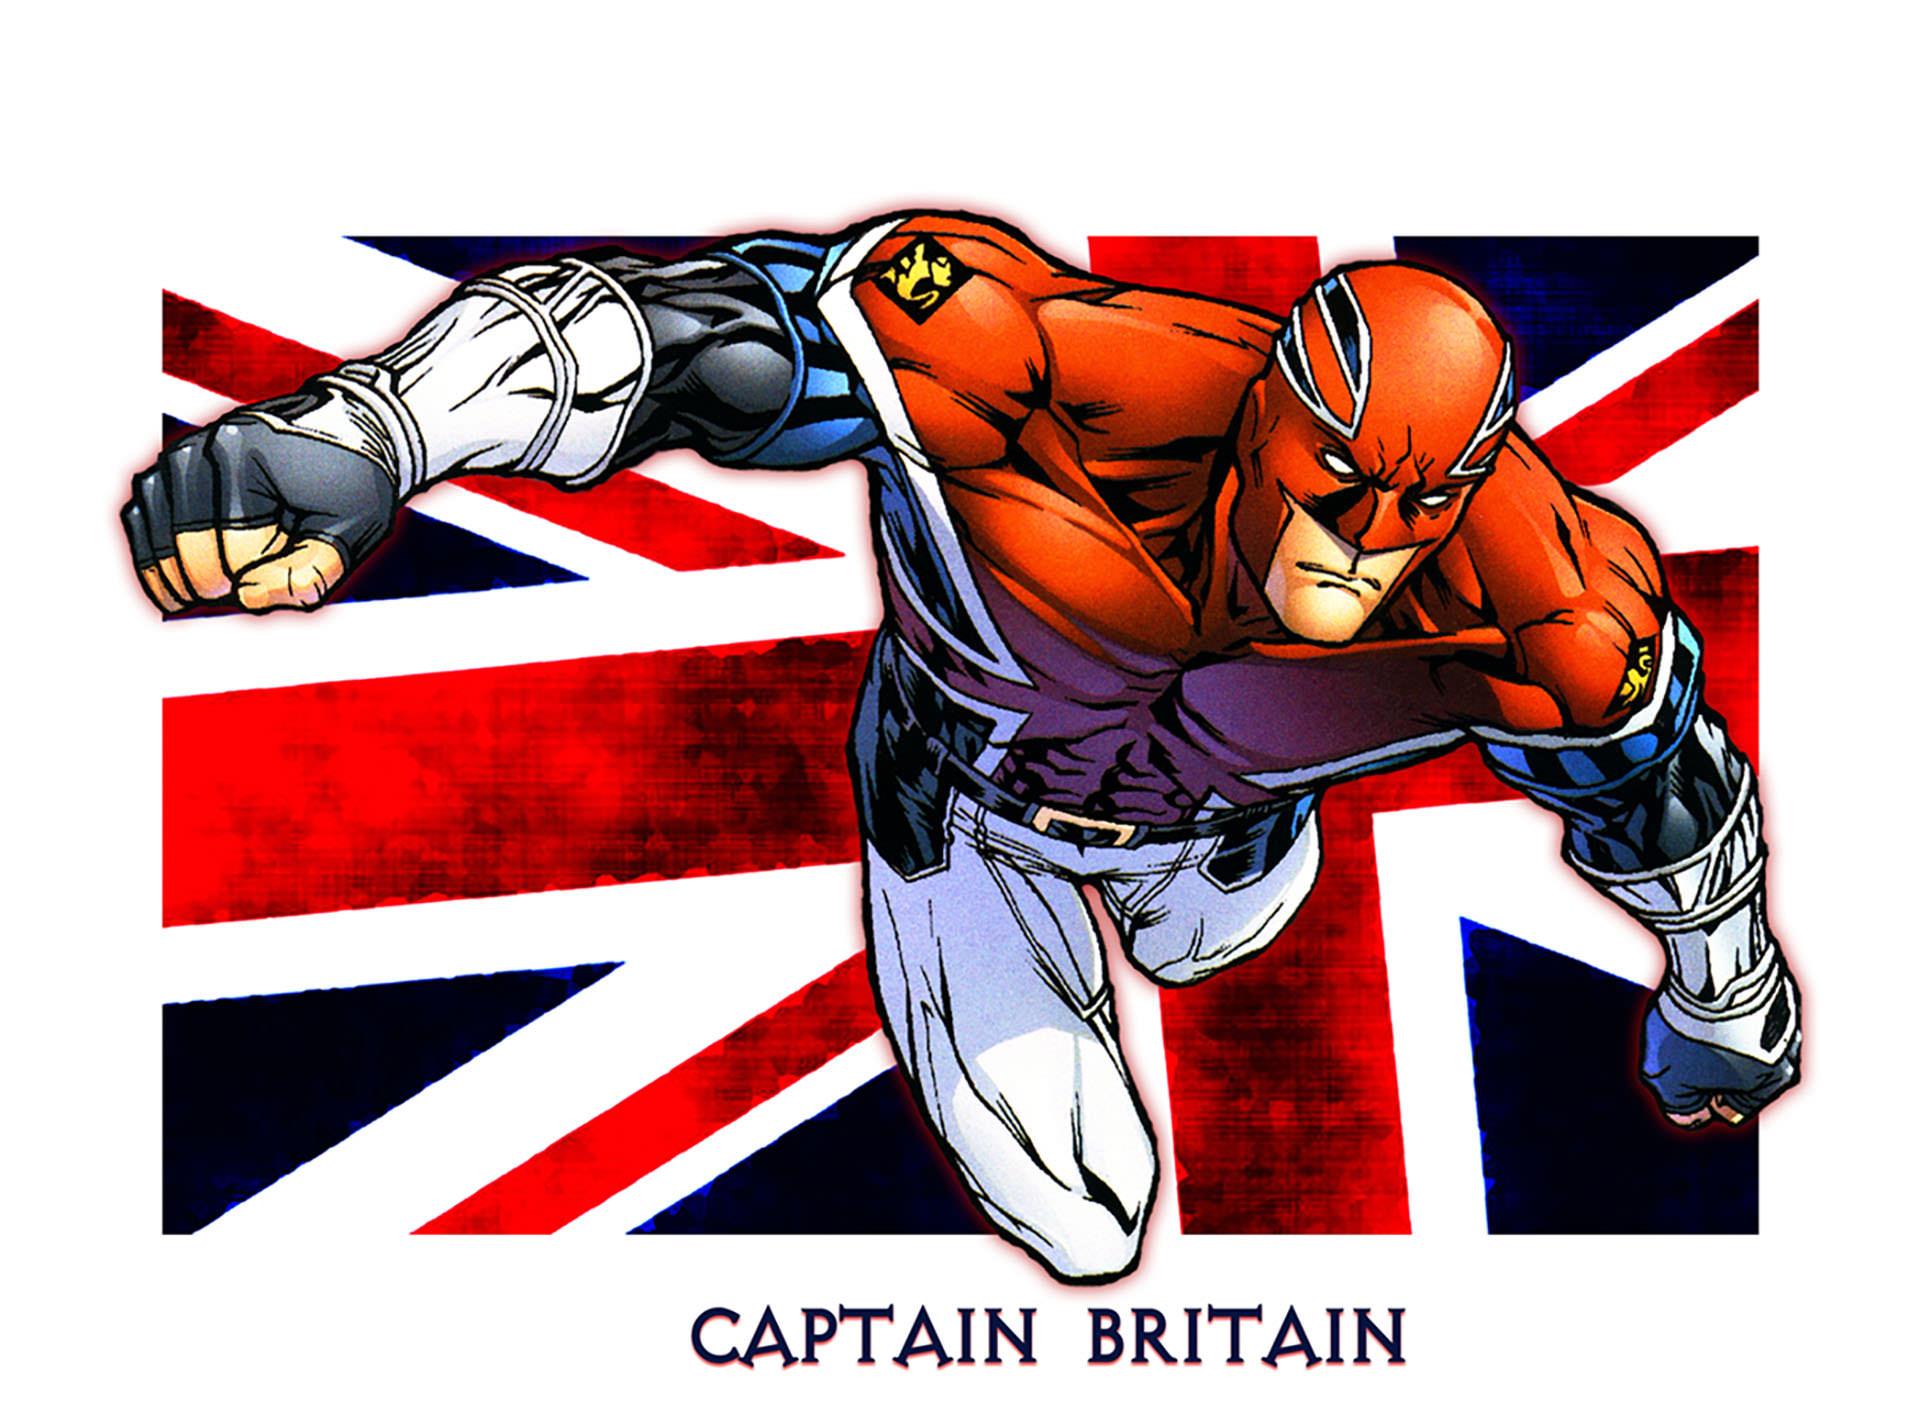 captain britain - کاپیتان بریتین - مارول کامیکس - marvel comics